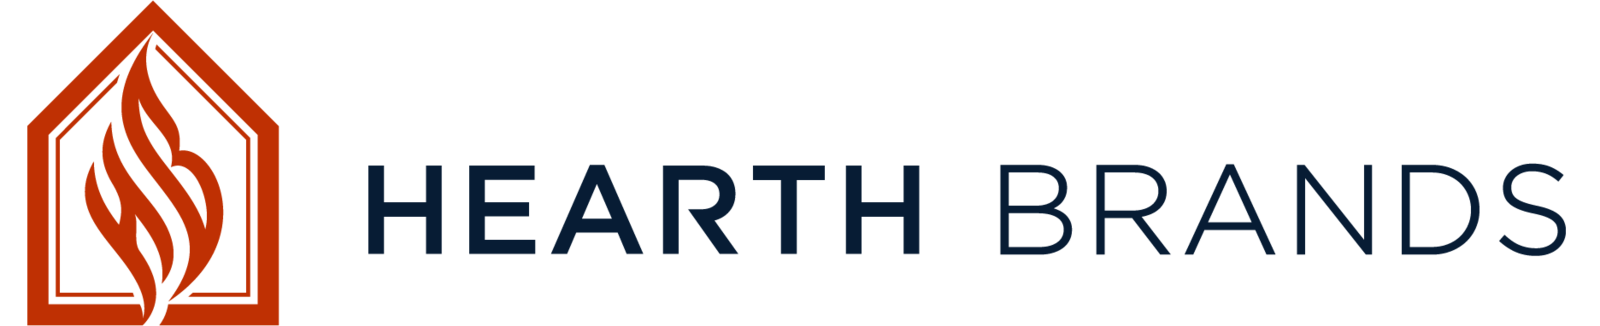 hearth-brands-logo